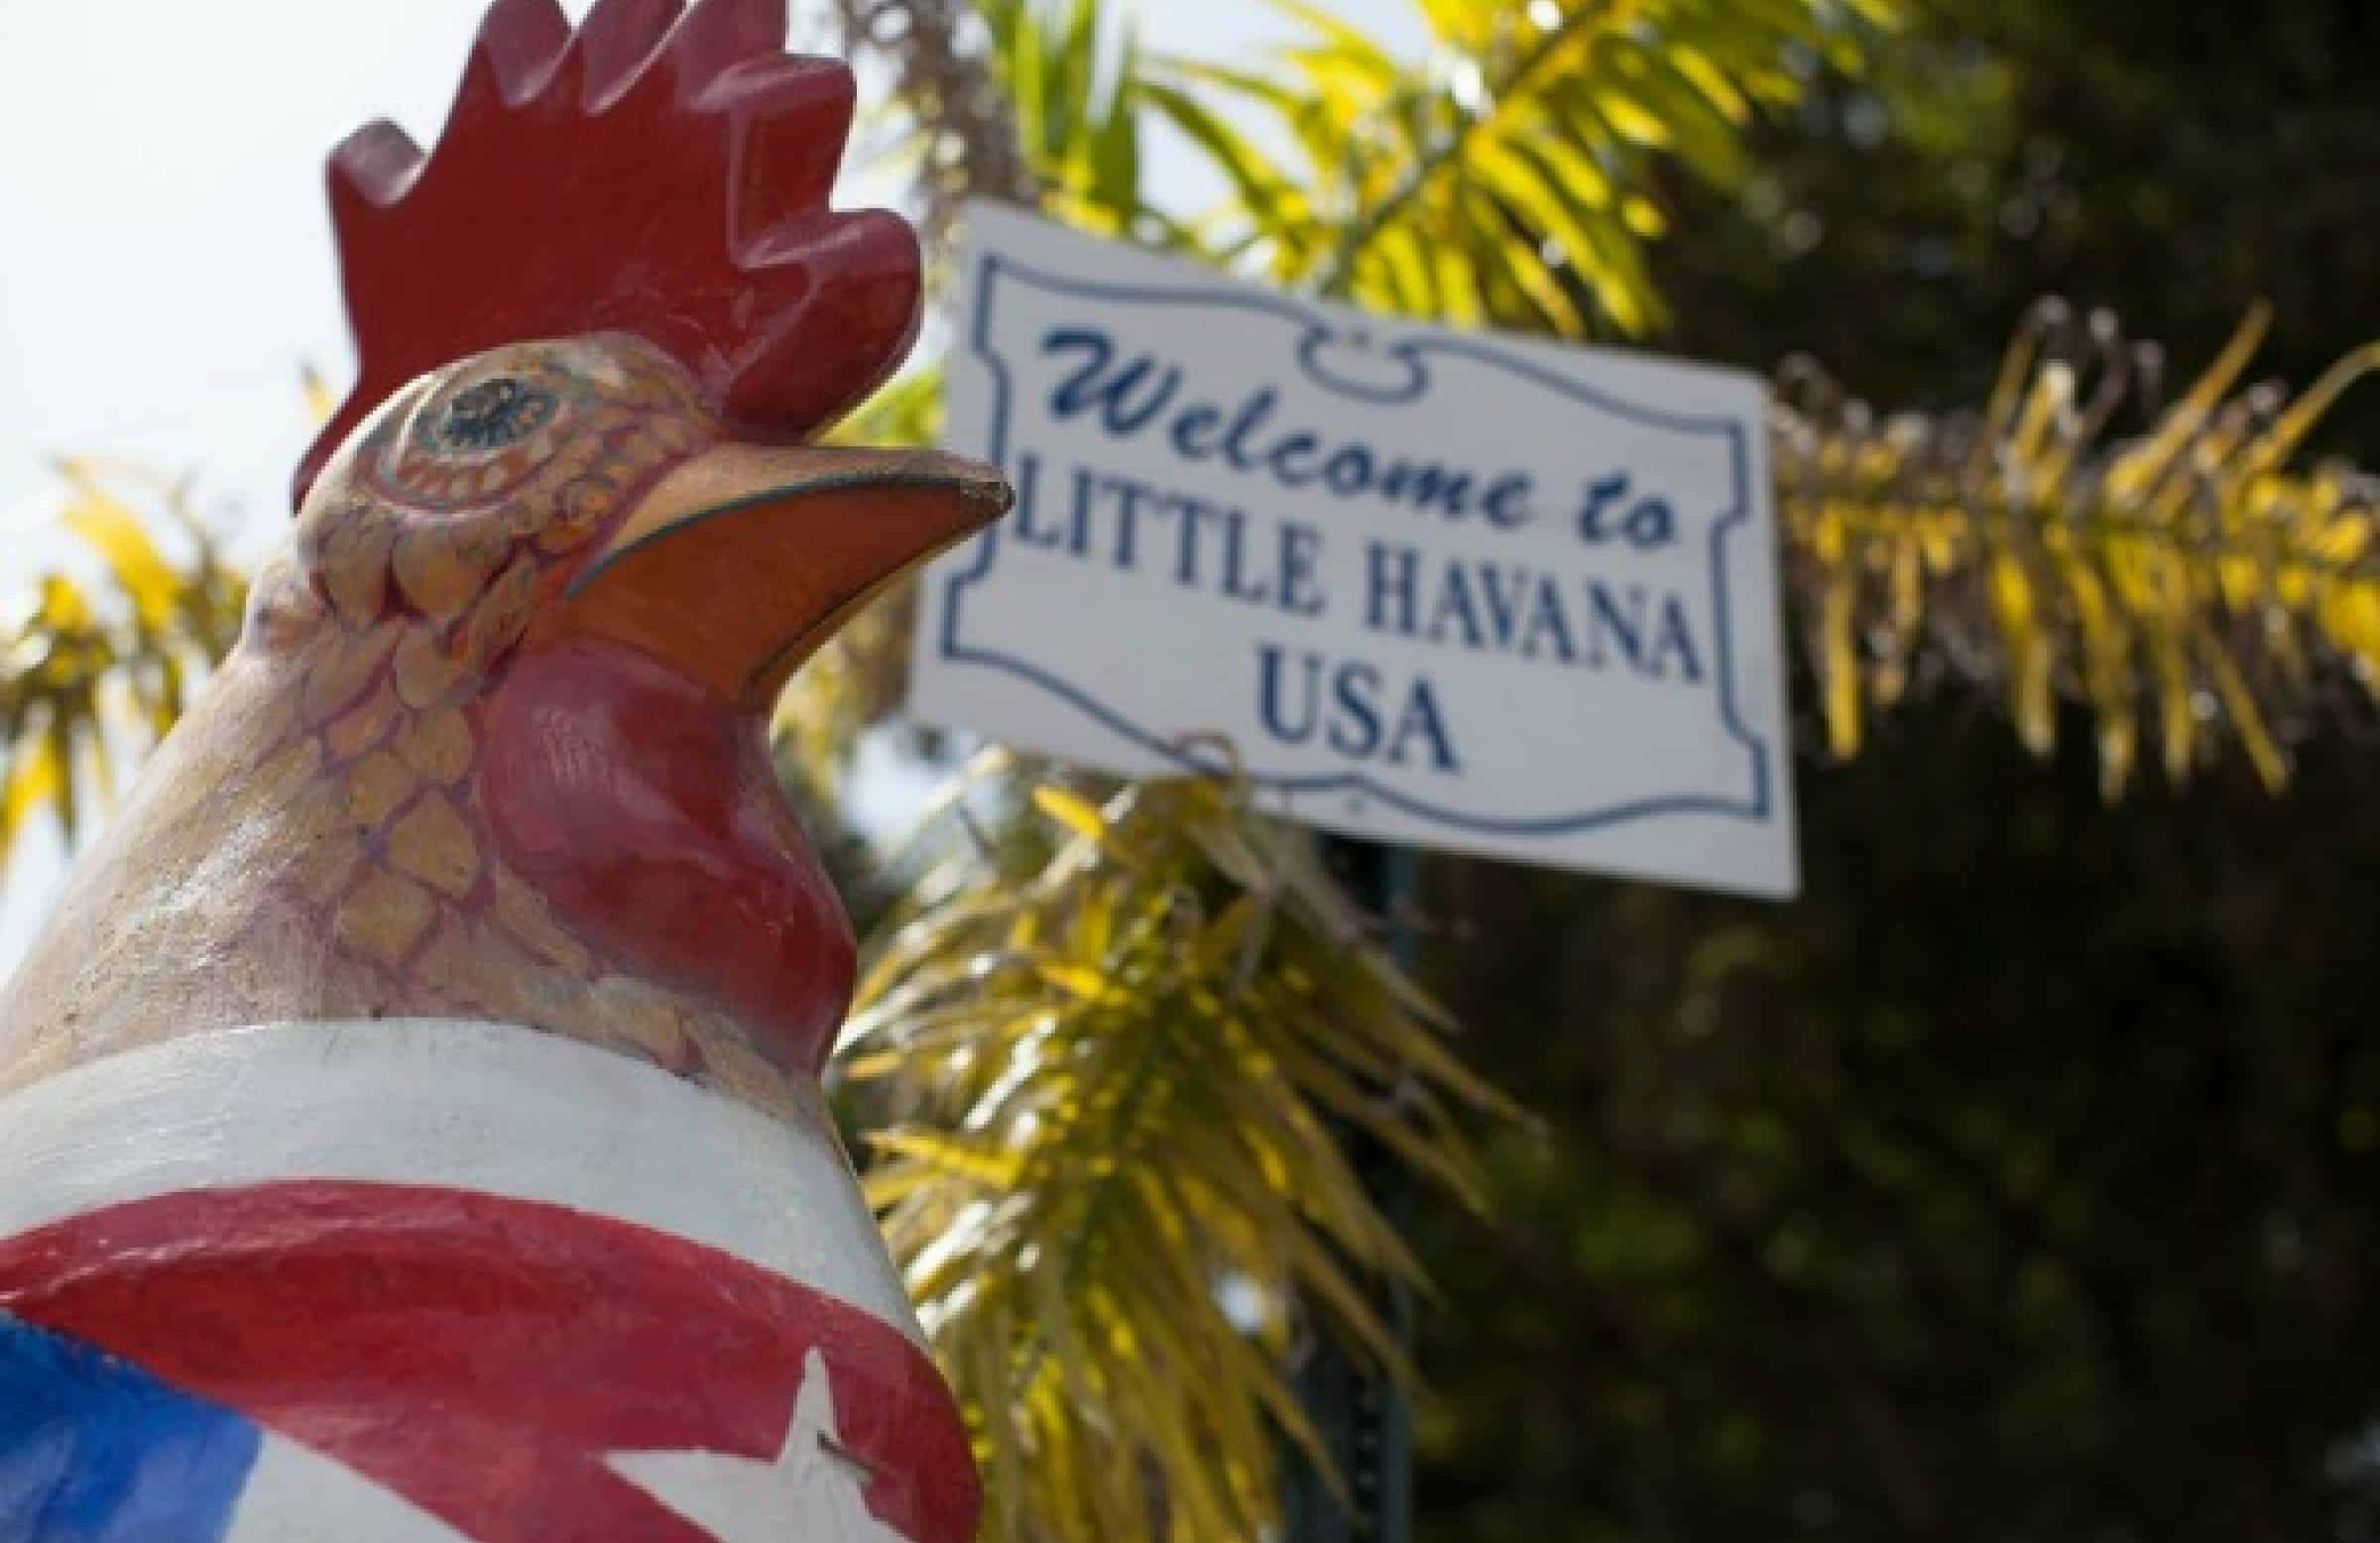 Little Havana Walking Tour